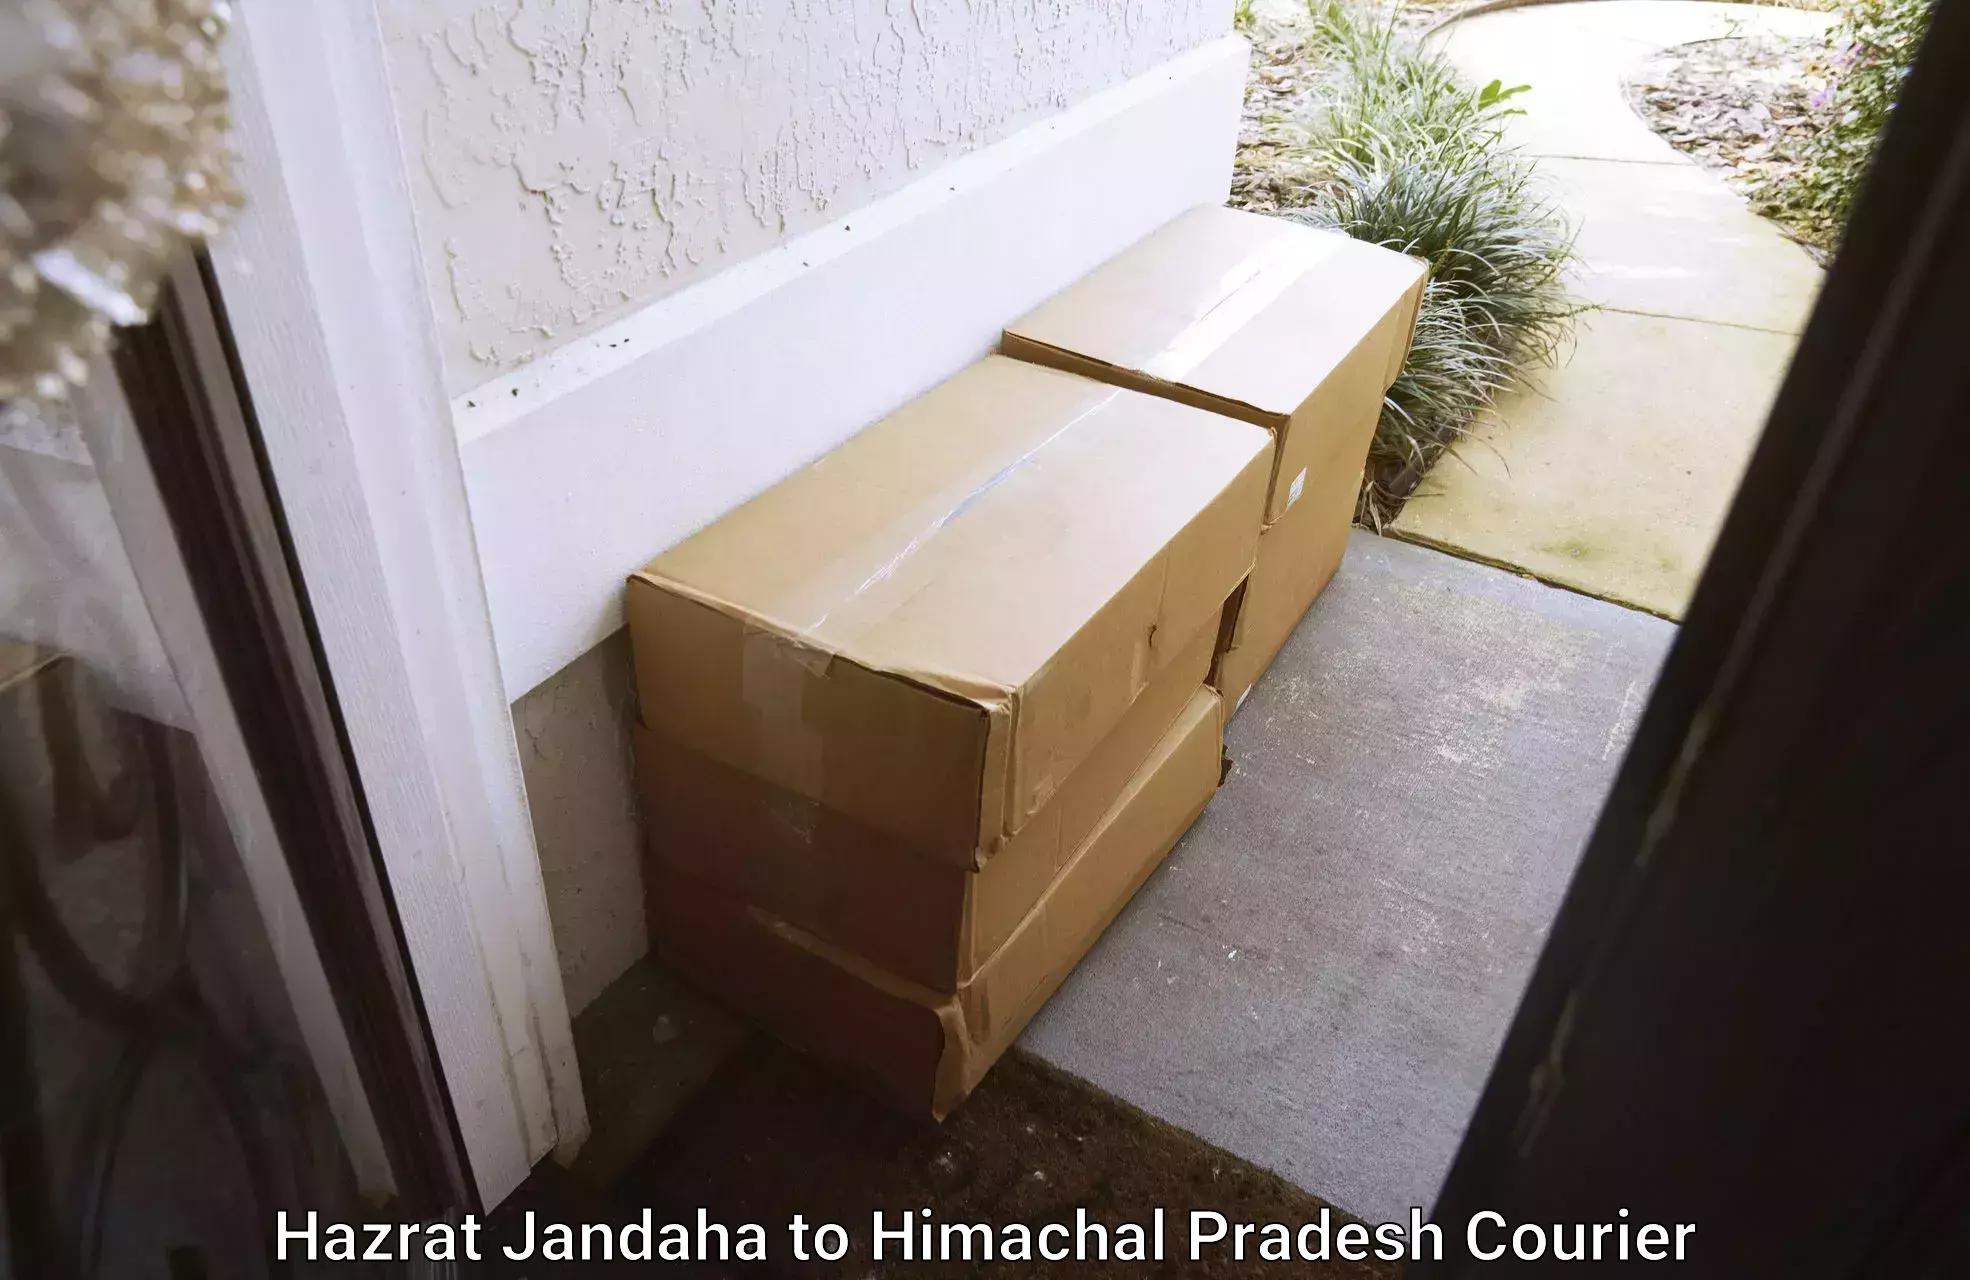 Professional furniture movers in Hazrat Jandaha to Mandi